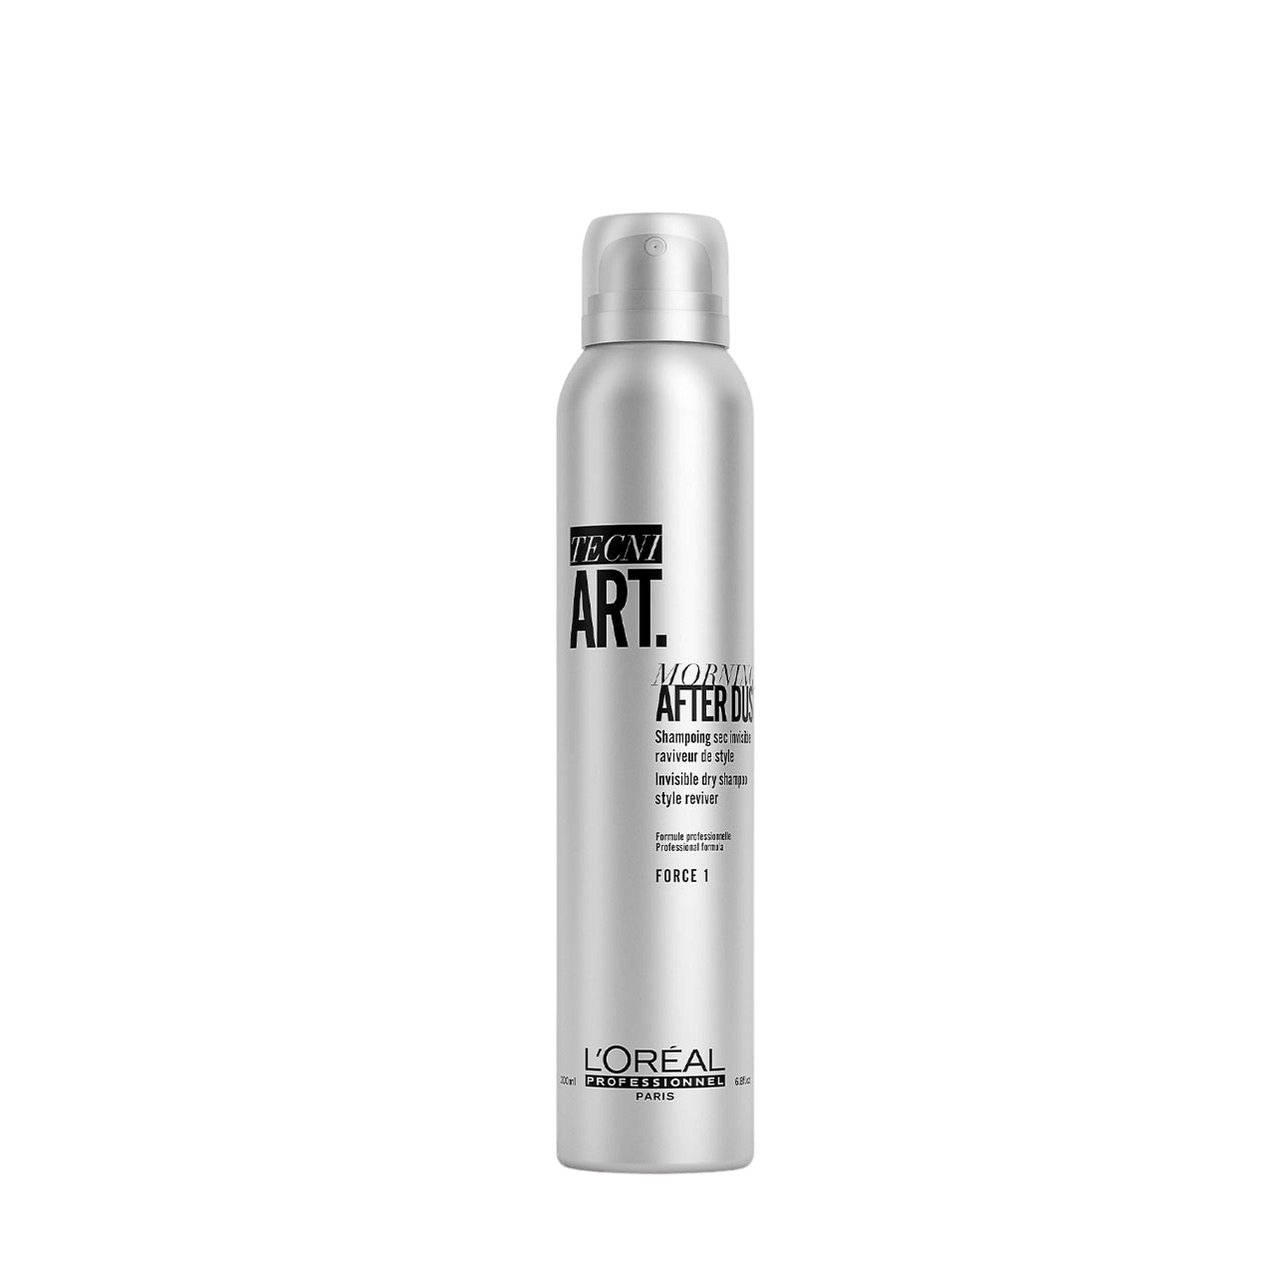 L'Oréal Professionnel Tecni Art Morning After Dust 200mL Aerosol Spray